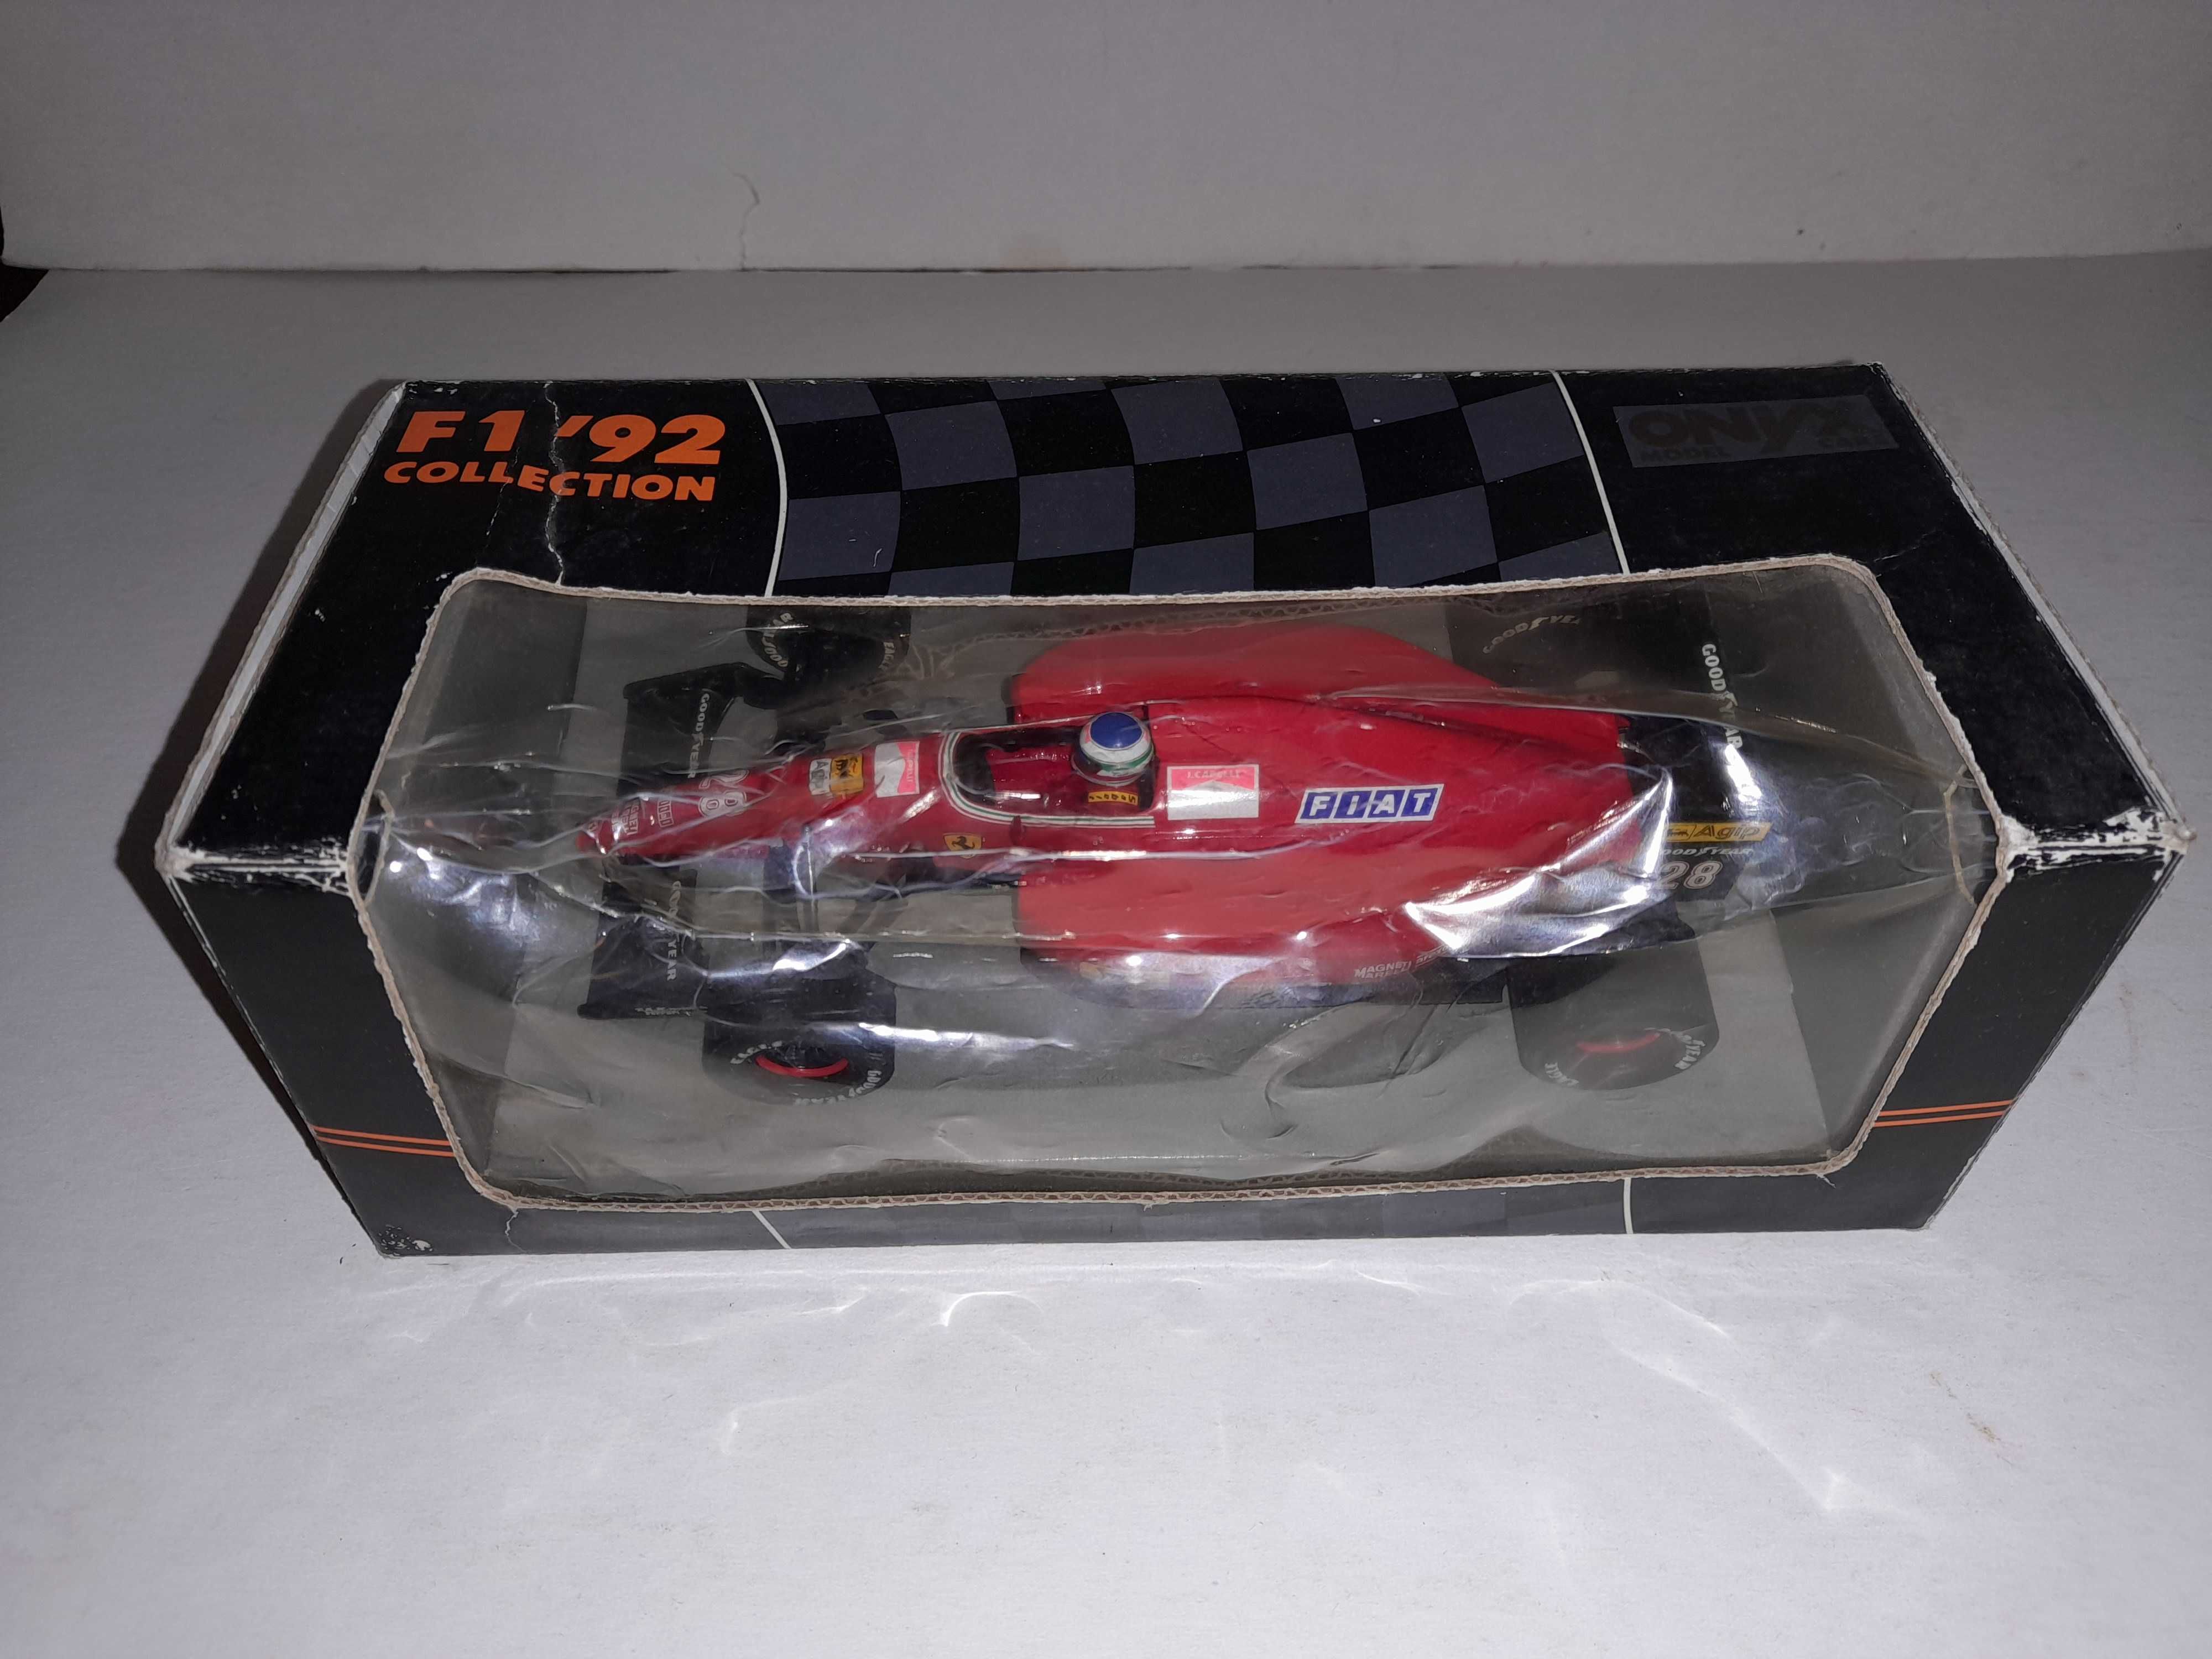 1/24 ONYX Ferrari F92A J. Alesi- I. Capelli 1992